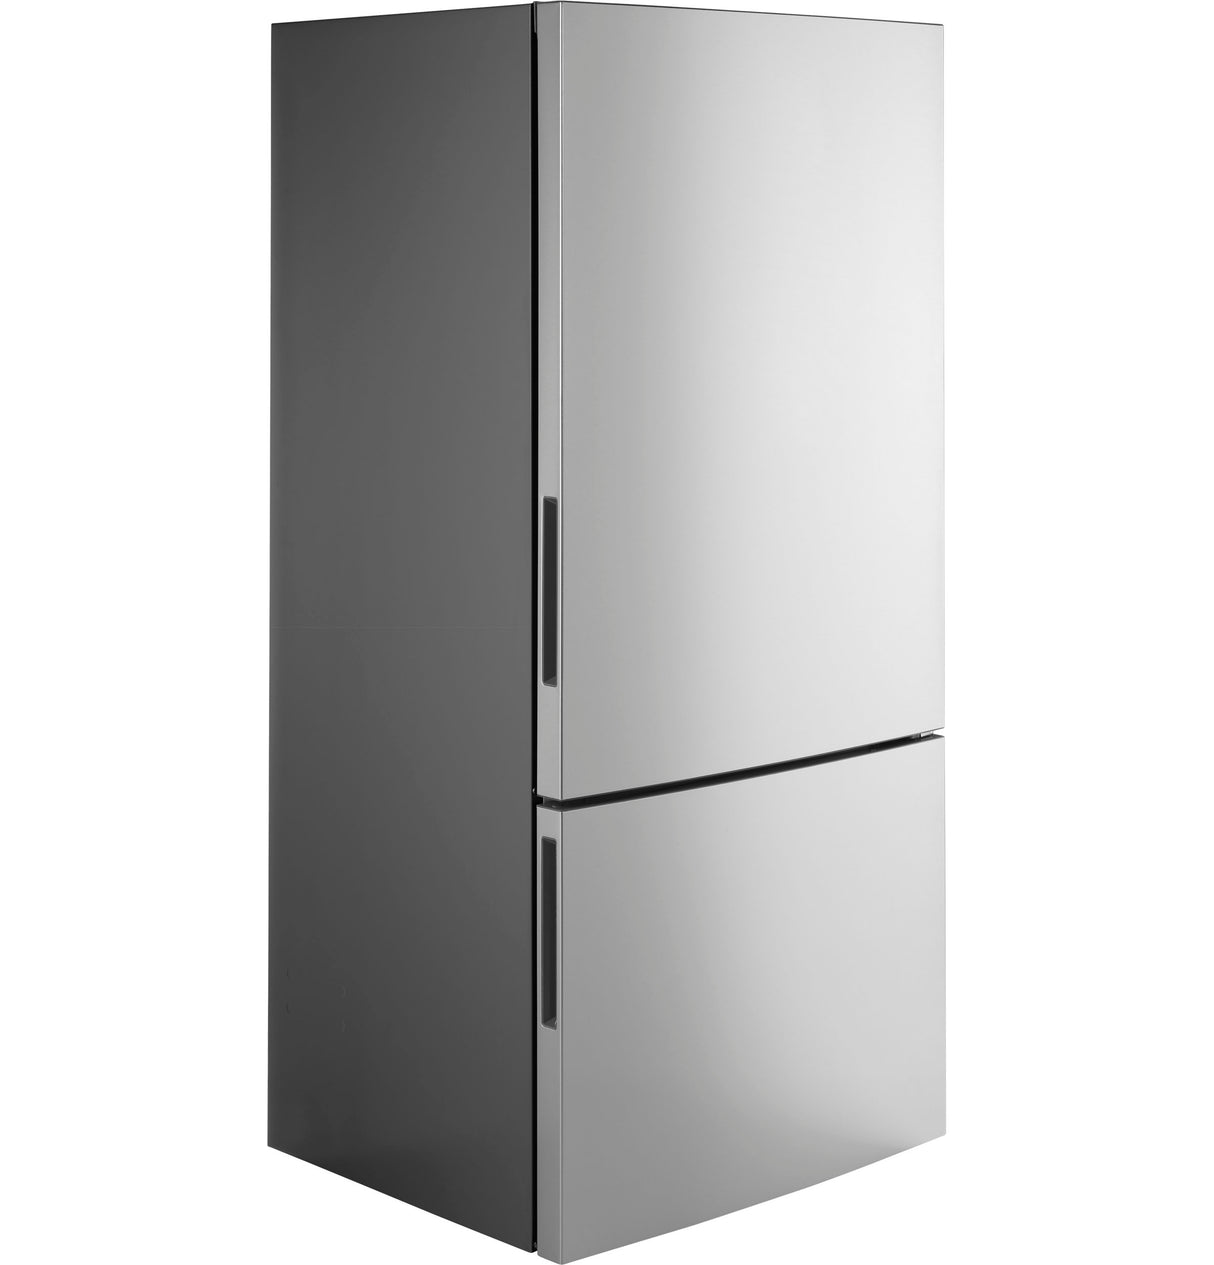 GE(R) ENERGY STAR(R) 17.7 Cu. Ft. Counter-Depth Bottom-Freezer Refrigerator - (GBE17HYRFS)